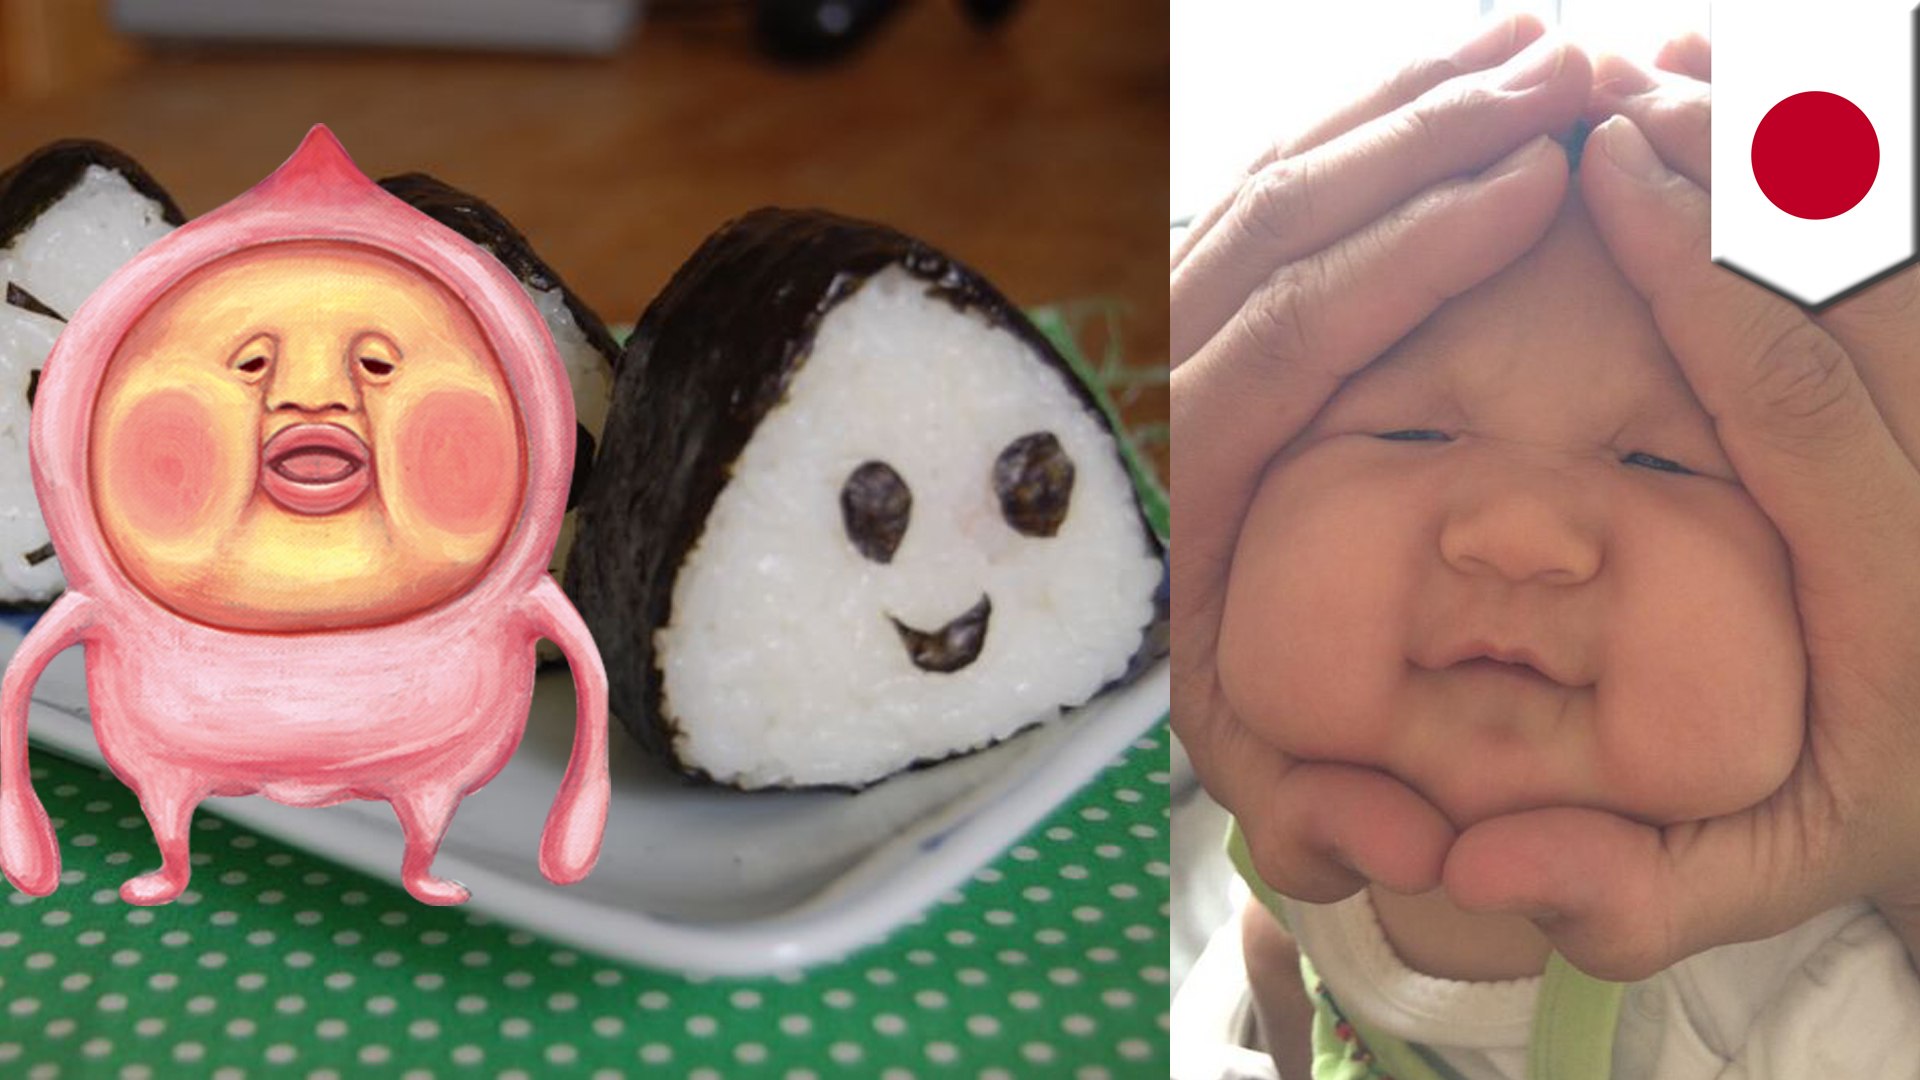 Japan's latest internet meme craze: #RiceBallBabies